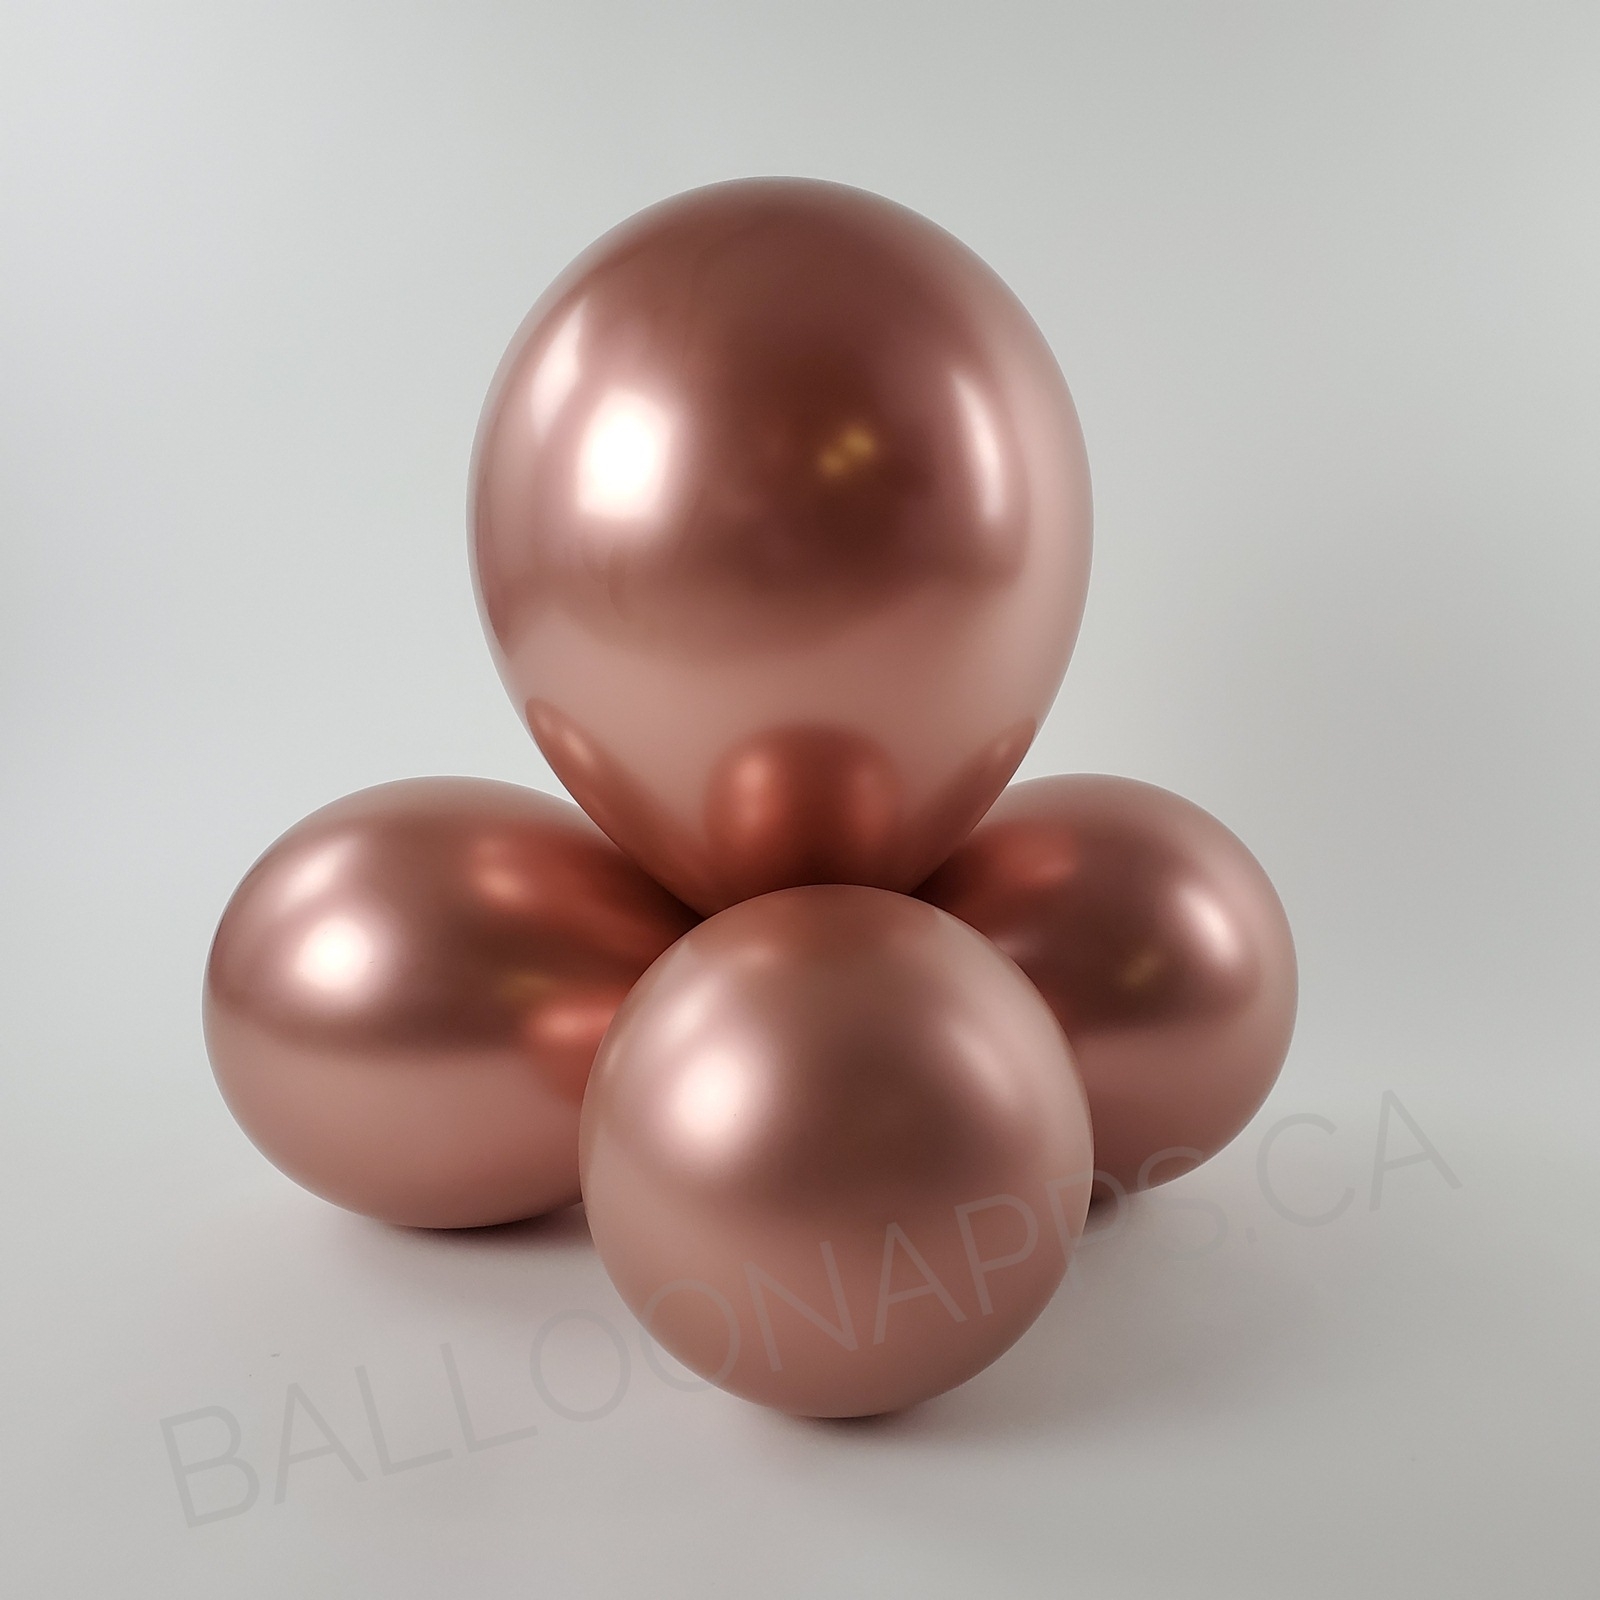 balloon texture Sempertex (15) 18